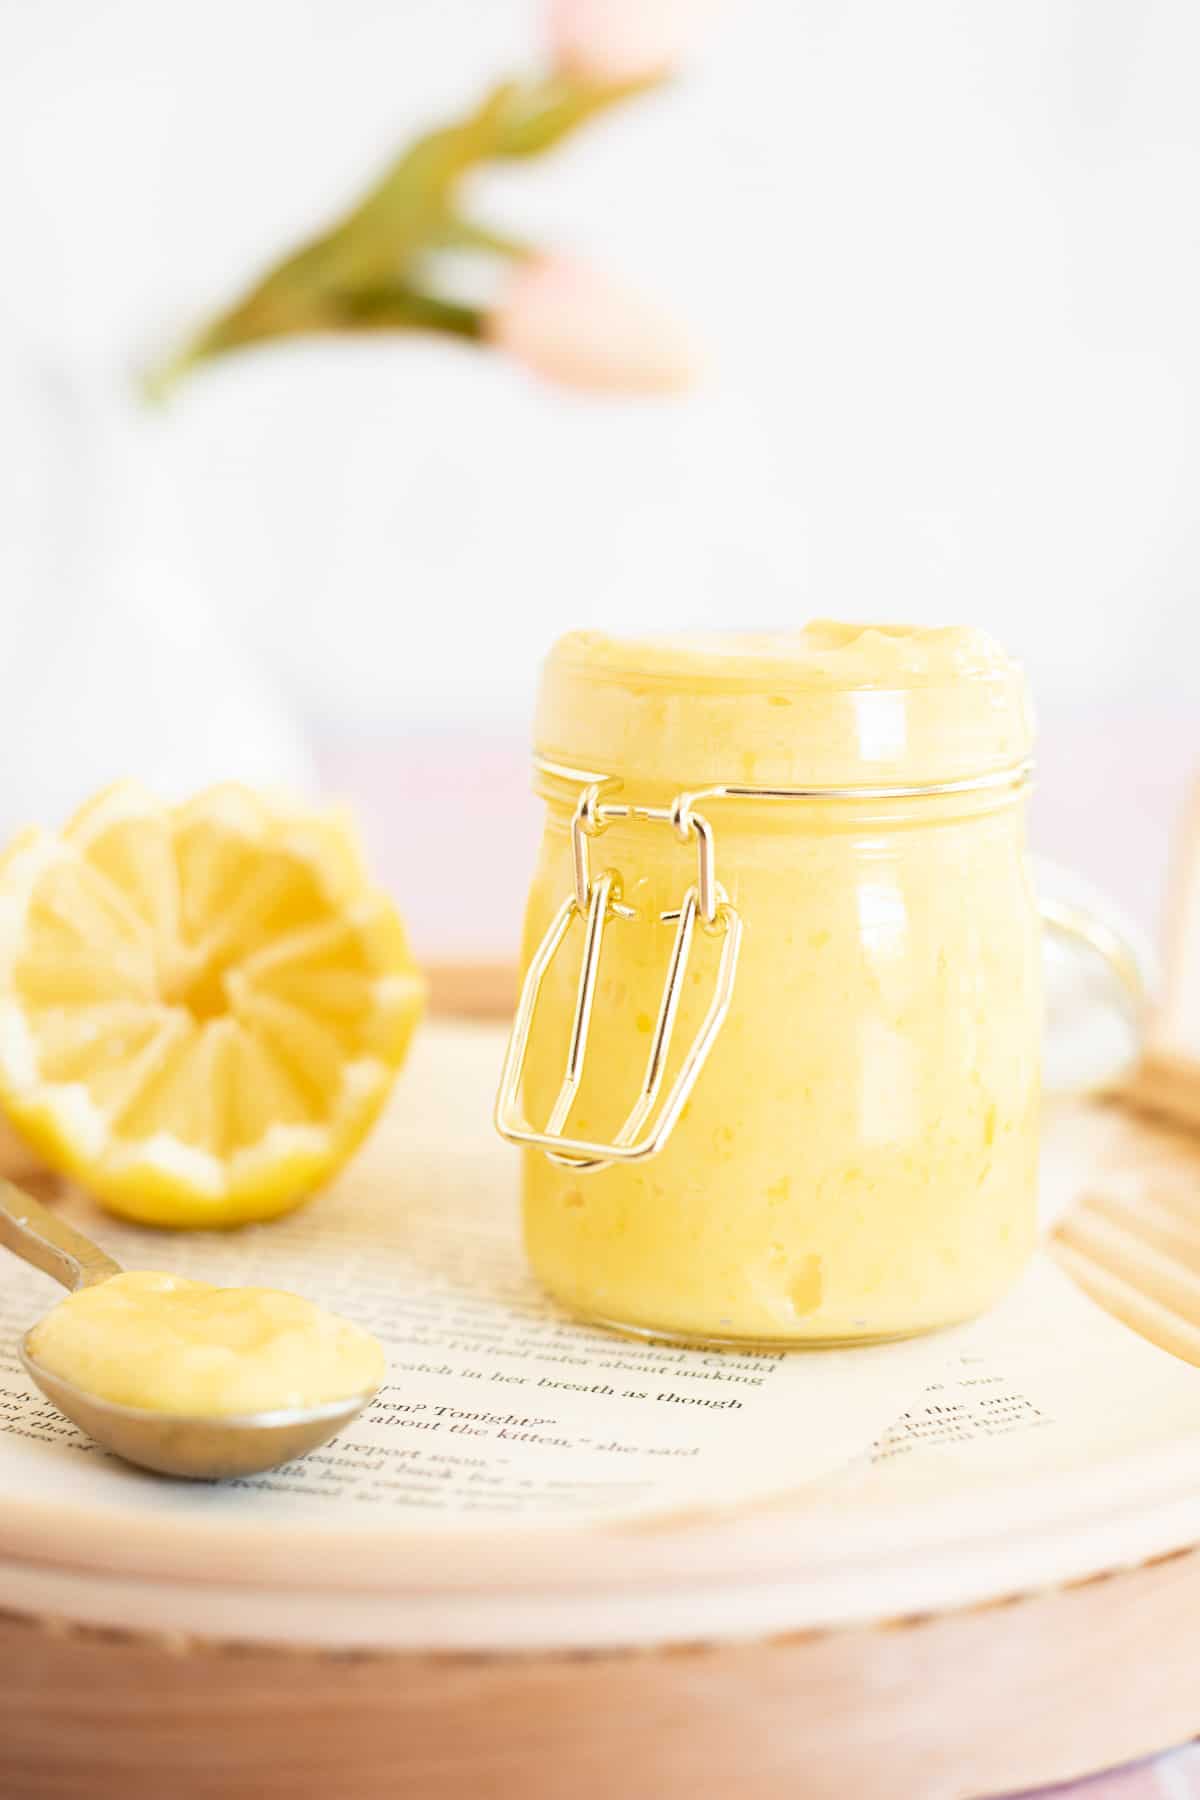 small batch of lemon curd in a glass jar.